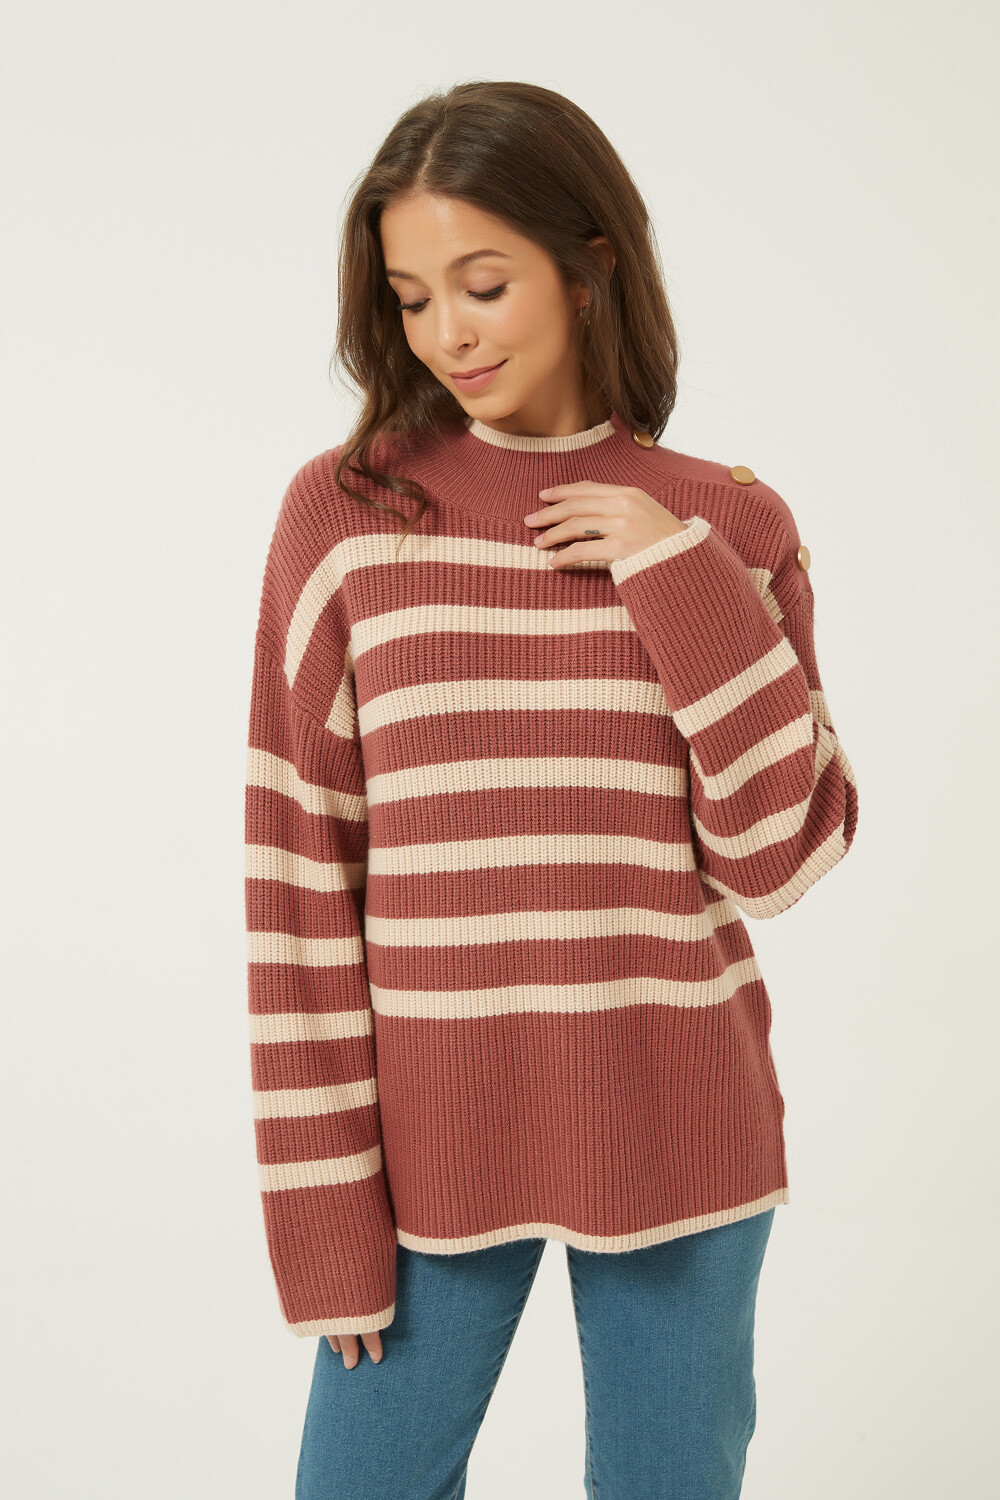 Sweater August Estampado 2